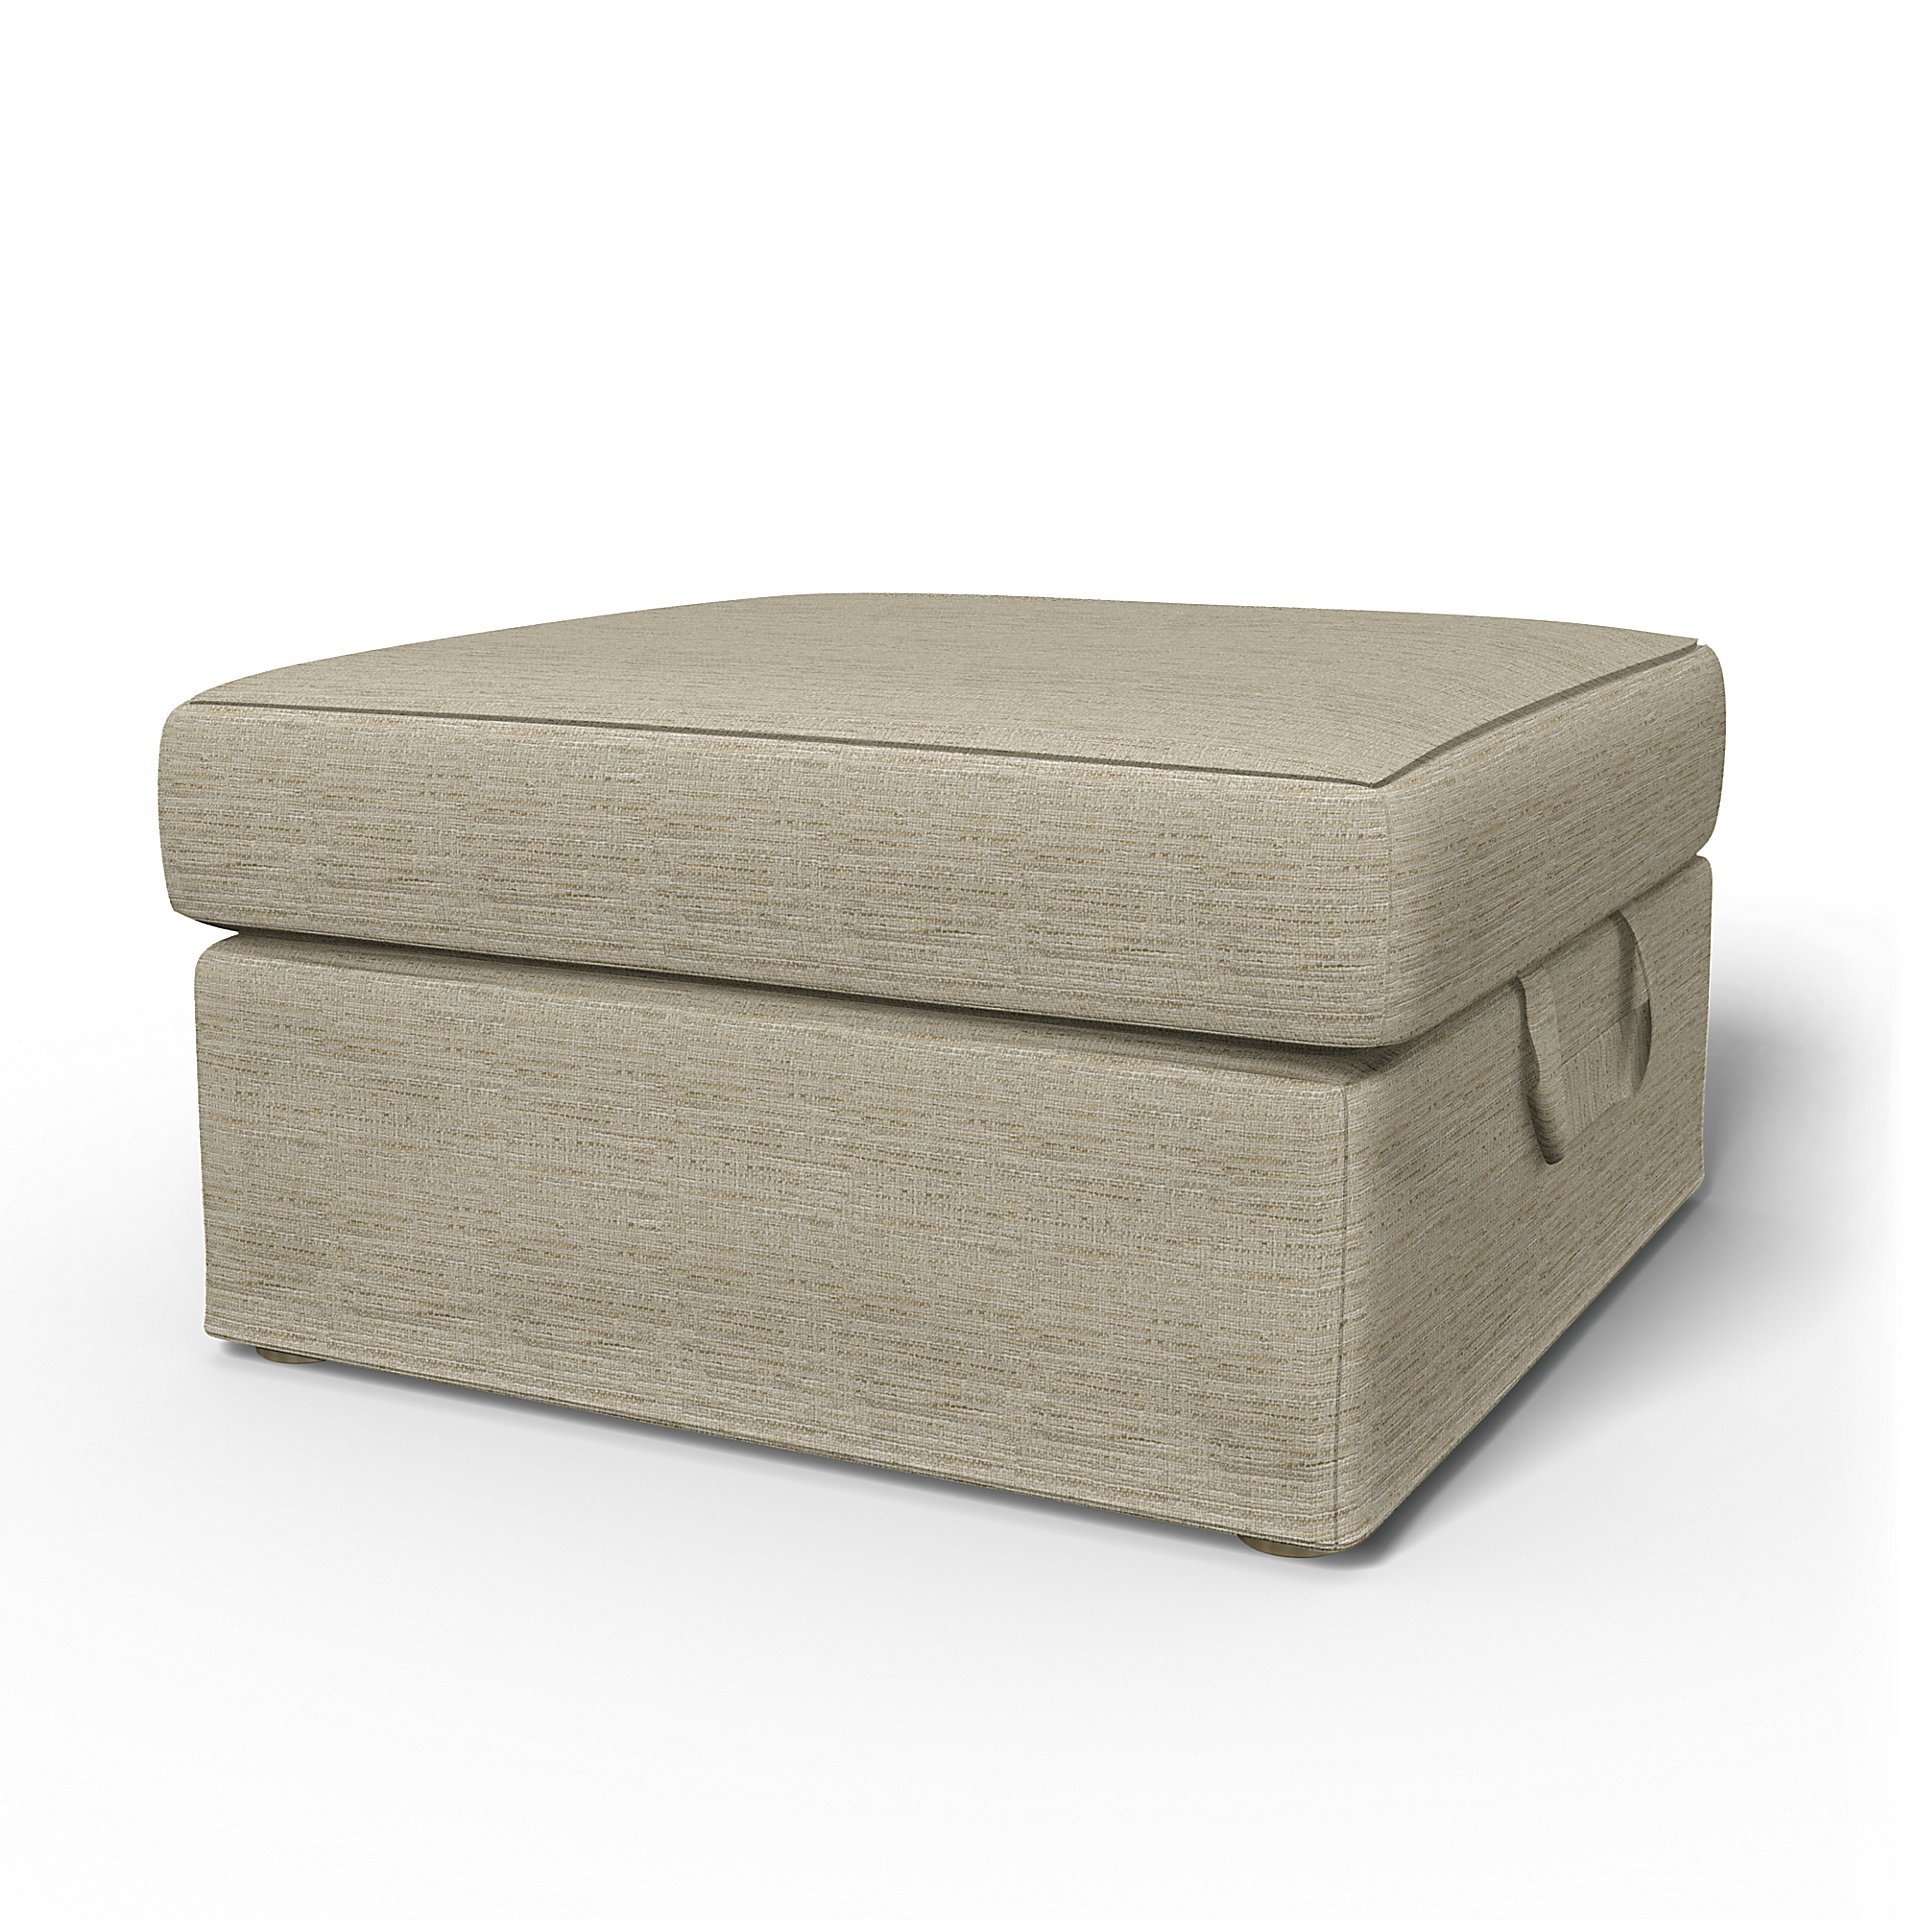 IKEA - Tomelilla Foto Footstool Cover, Light Sand, Boucle & Texture - Bemz